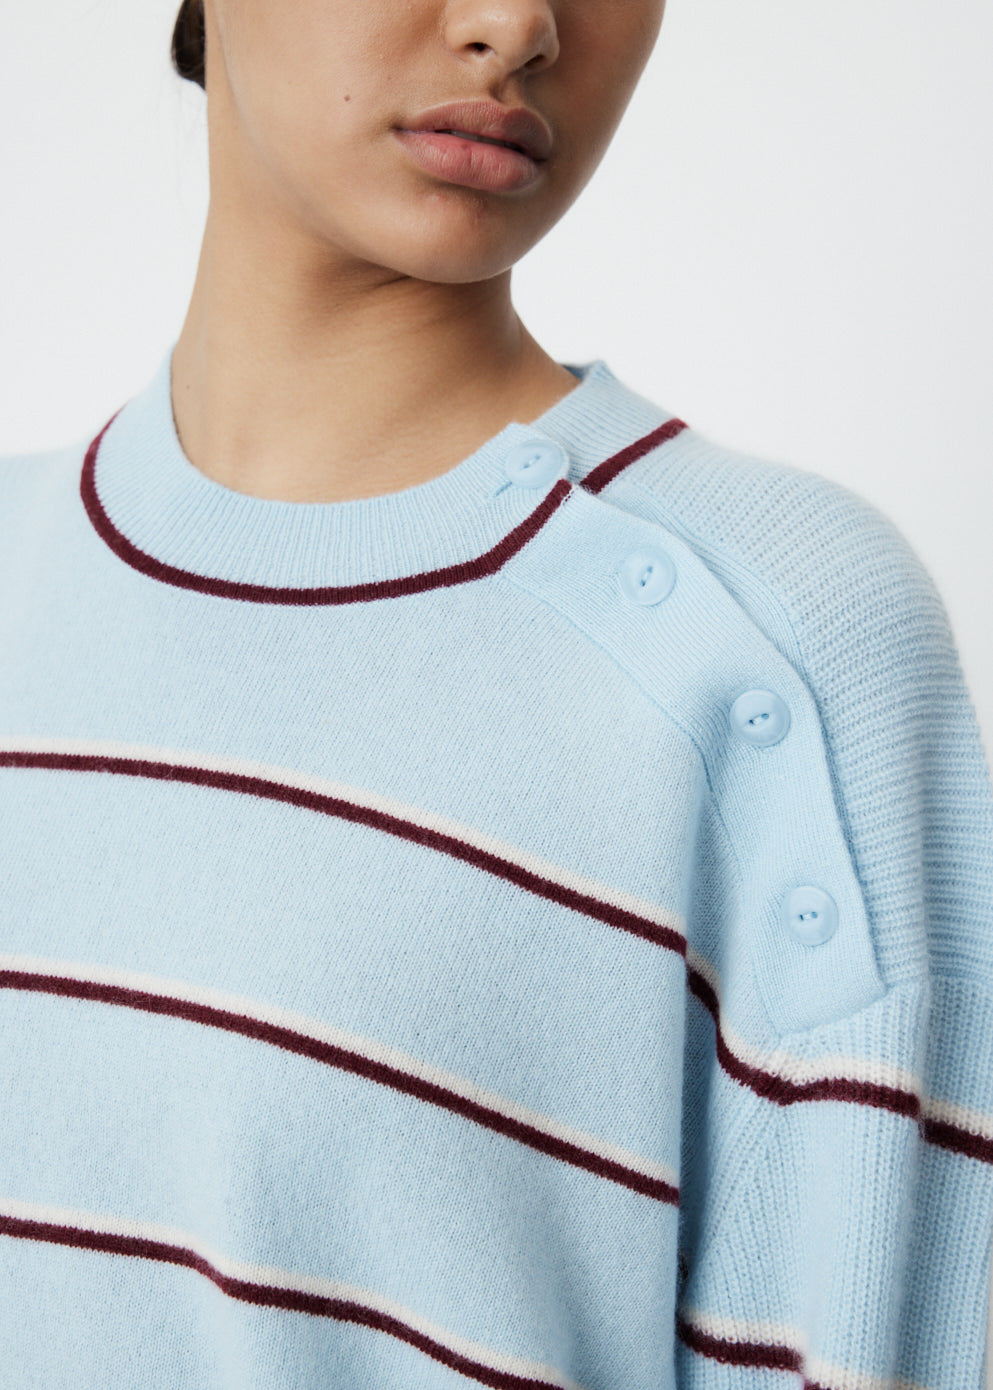 Pierce Striped Sweater